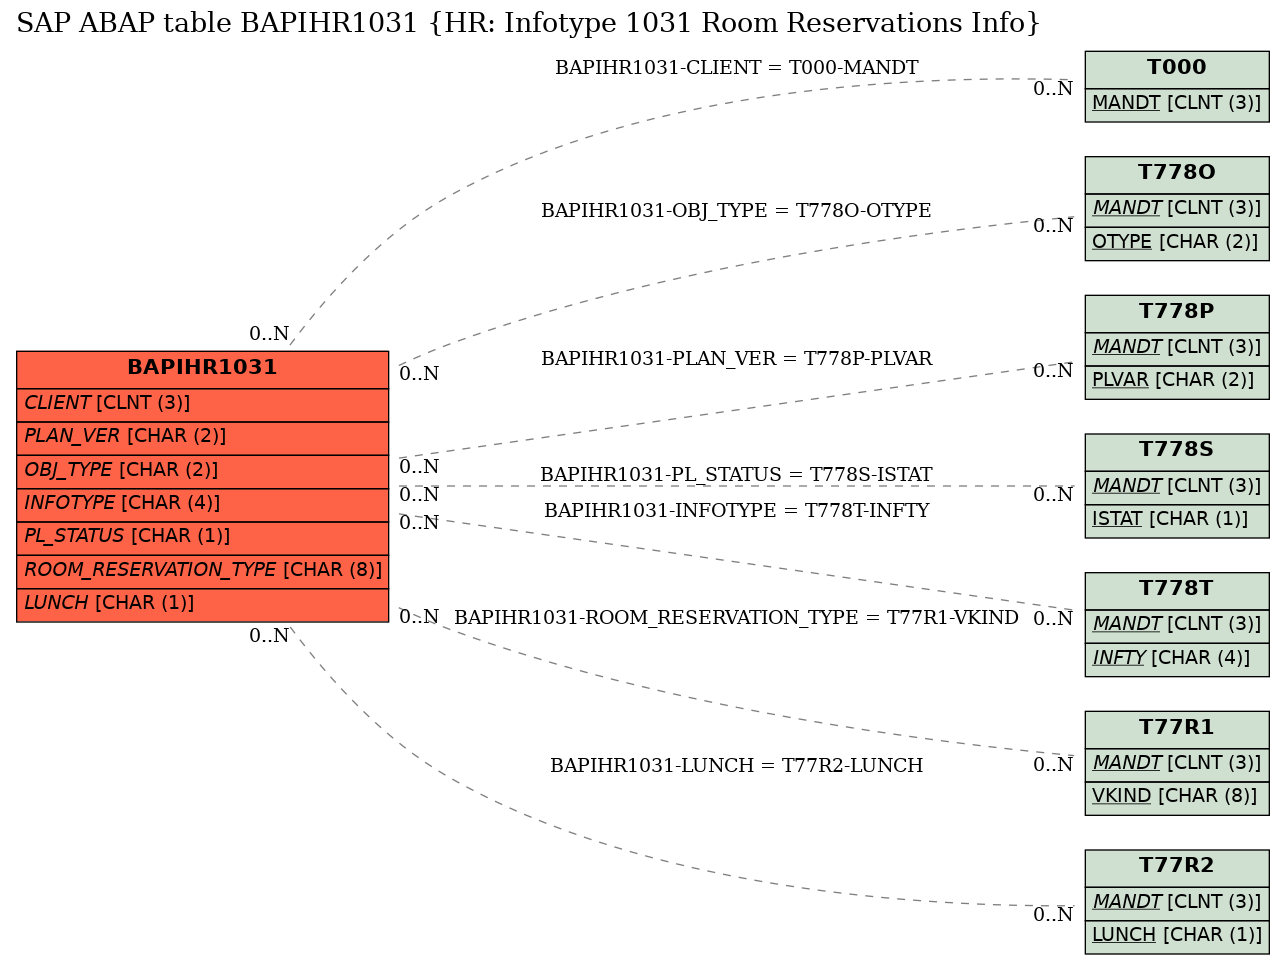 E-R Diagram for table BAPIHR1031 (HR: Infotype 1031 Room Reservations Info)